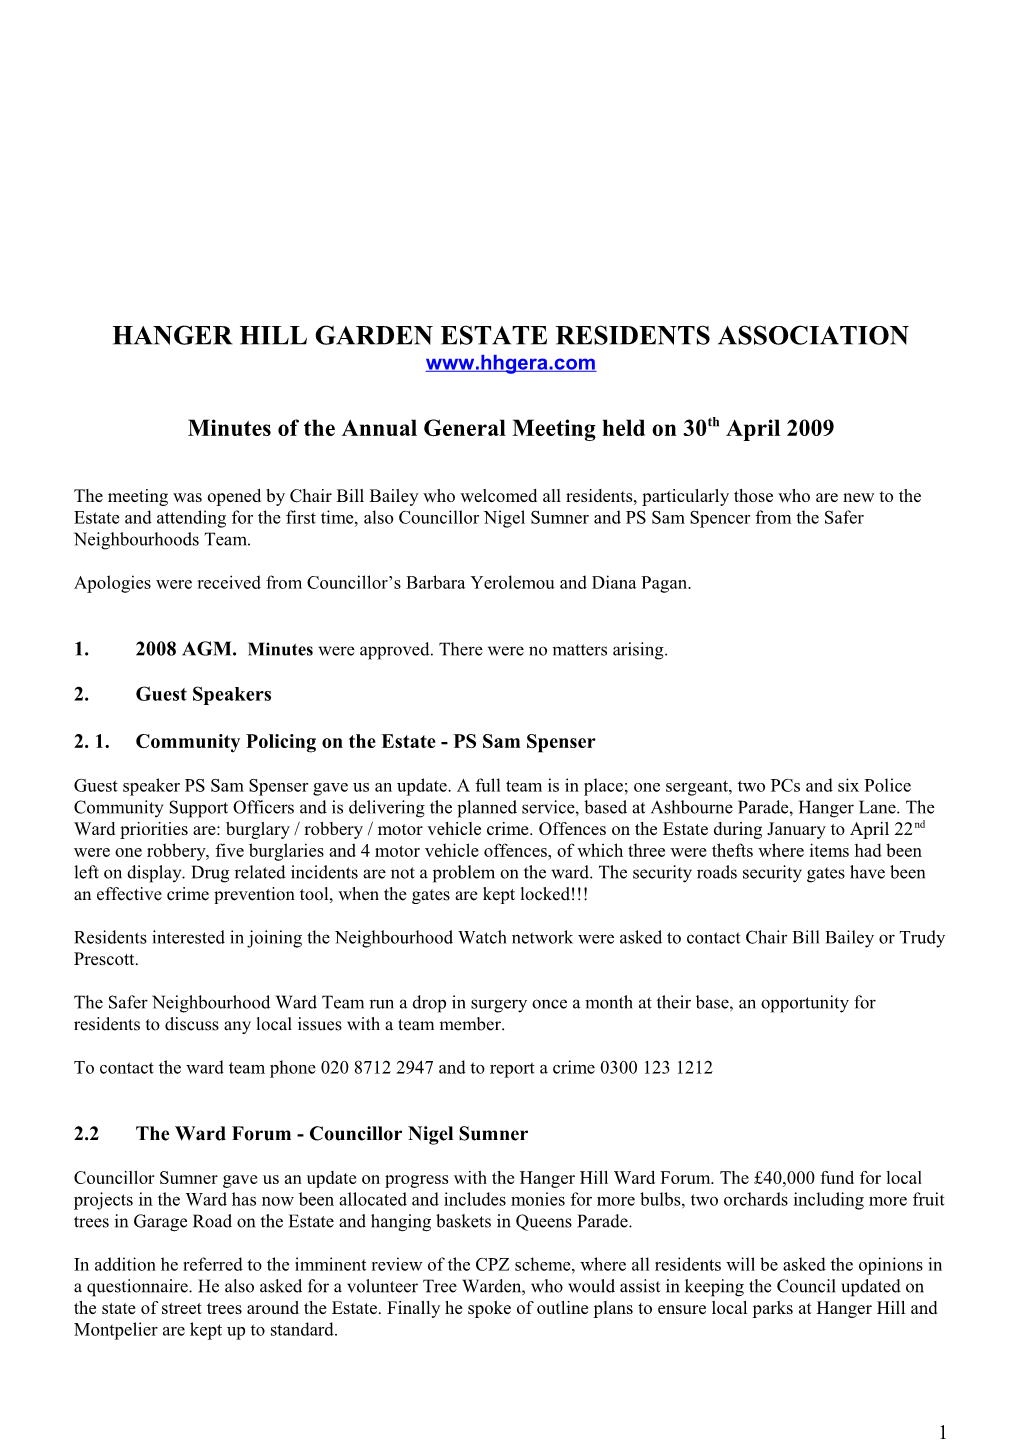 Hanger Hill Garden Estate Residents Association